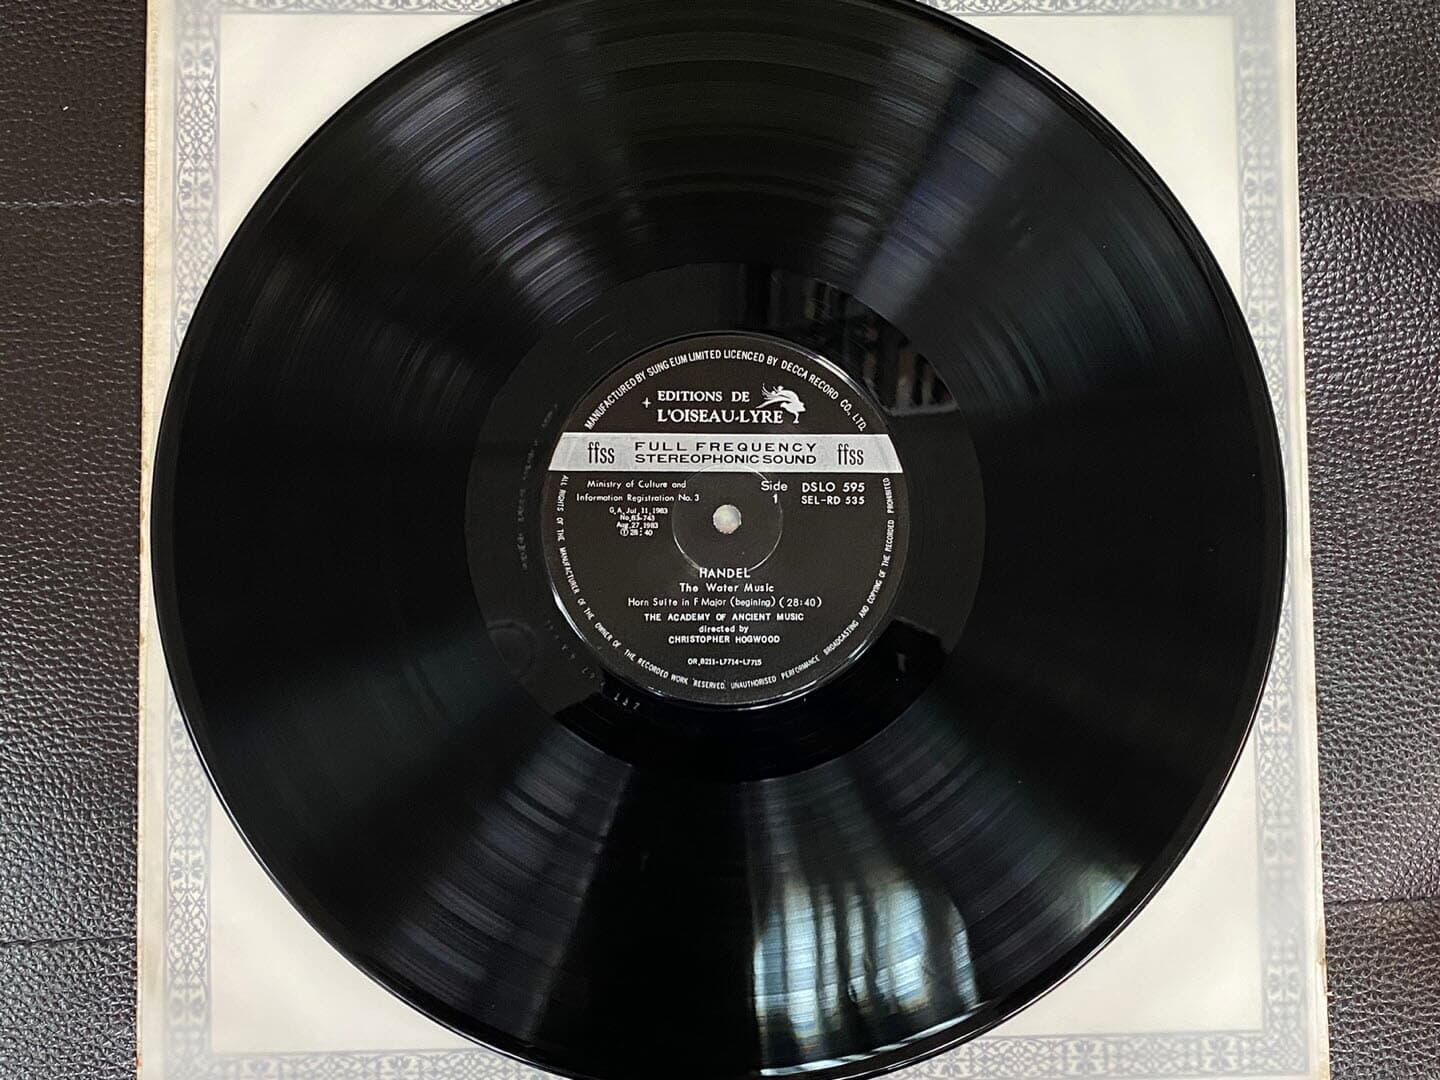 [LP] 크리스토퍼 호그우드 - Christopher Hogwood - Handel Water Music-Suite LP [성음-라이센스반]